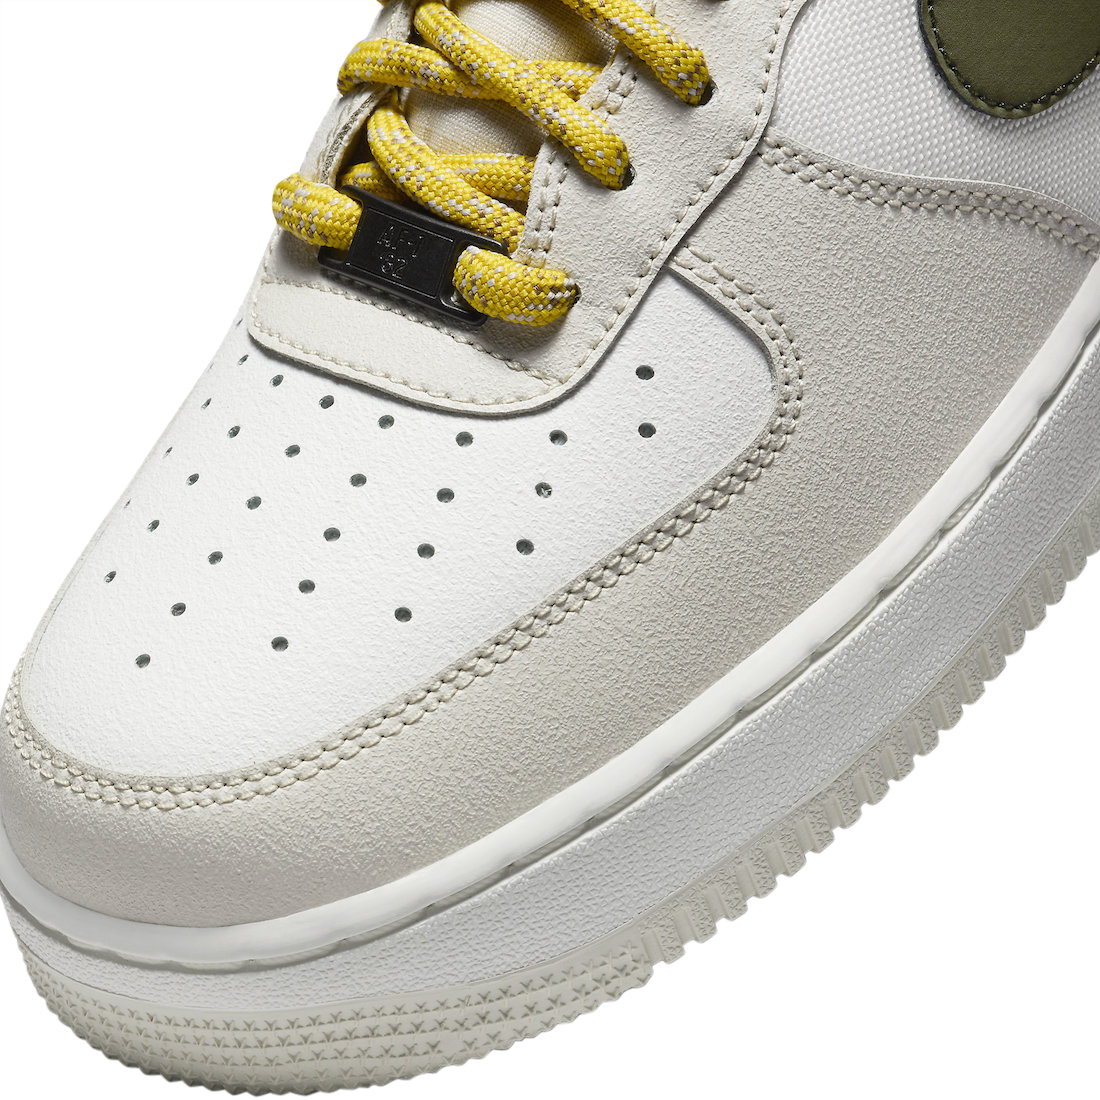 Nike Air Force 1 Pixel sneakers in cargo khaki